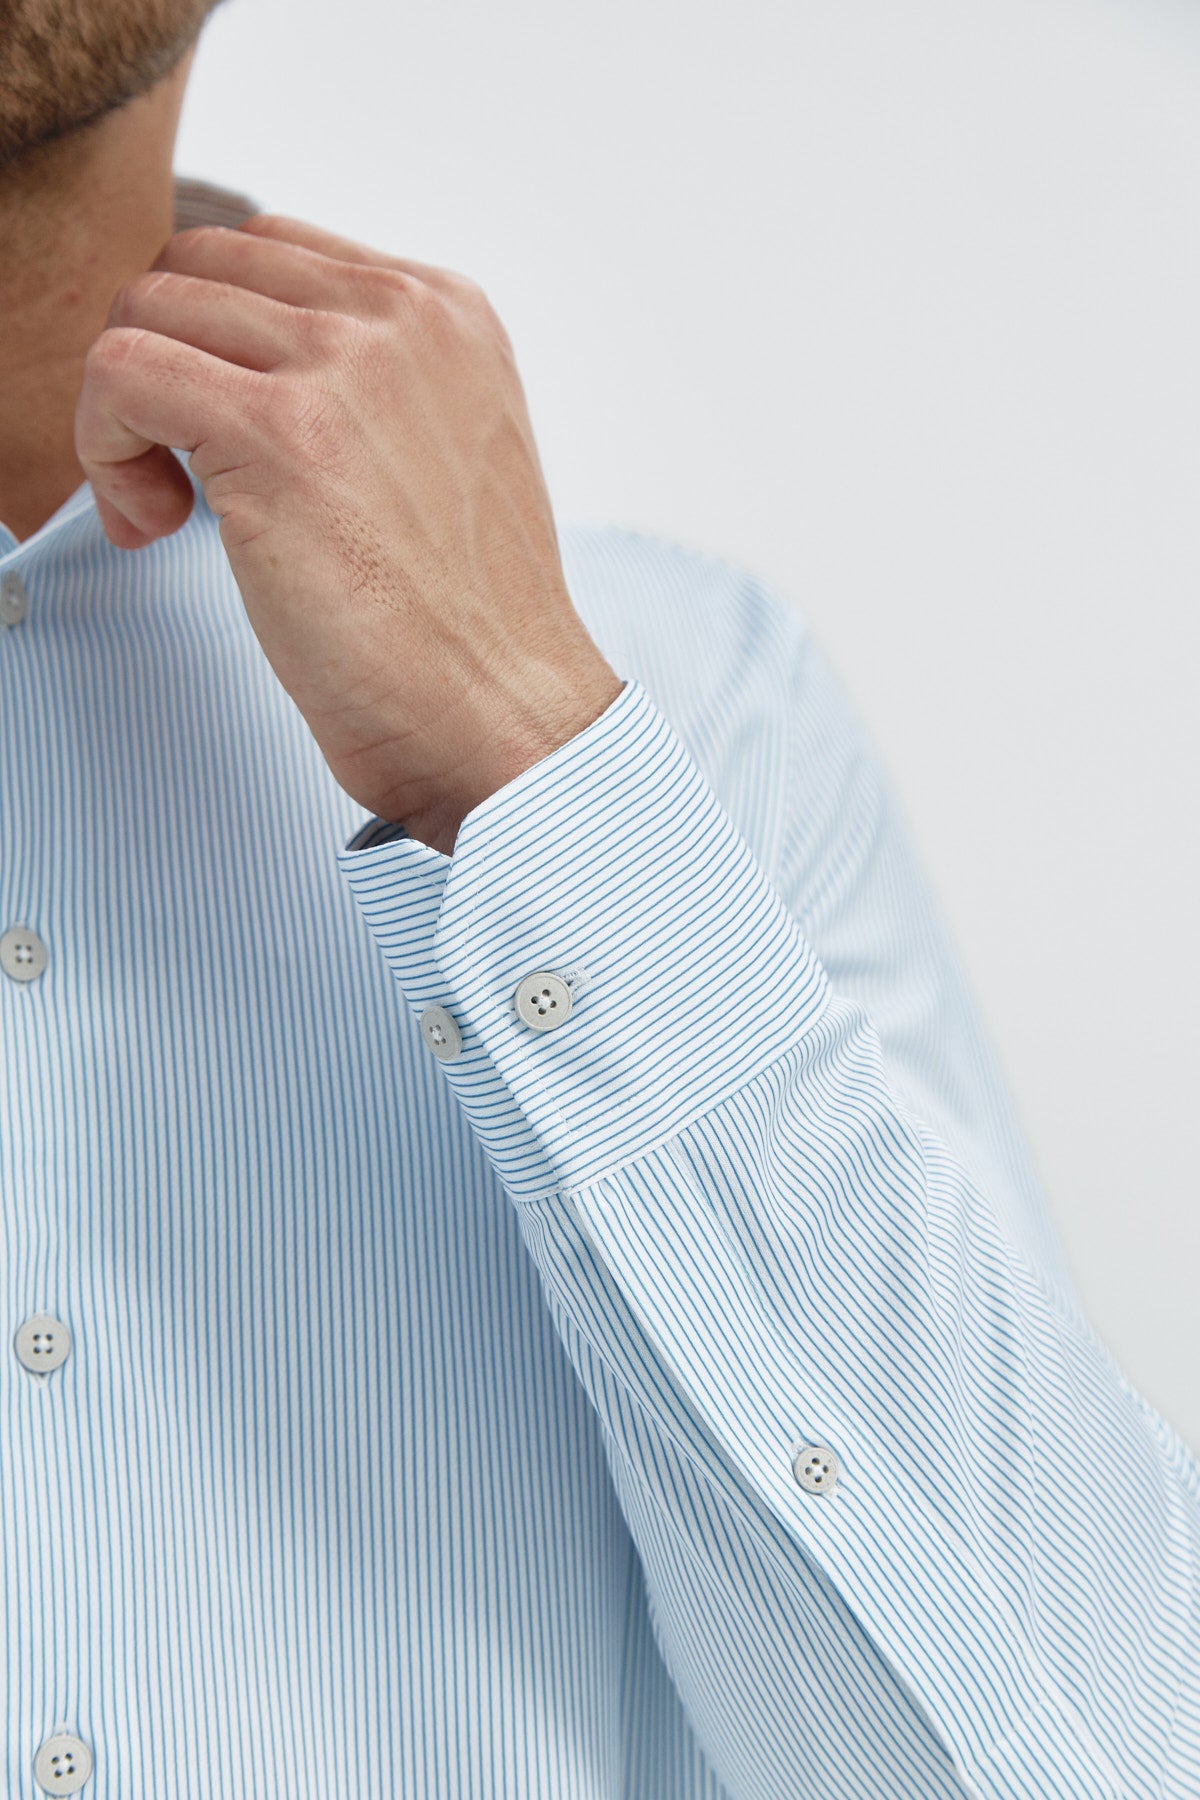 Camisa de vestir de rayas azules de manga larga regular para hombre Sepiia: Camisa de vestir de manga larga regular para hombre sin arrugas, antimanchas, perfecta para traje o americana. Foto detalle.